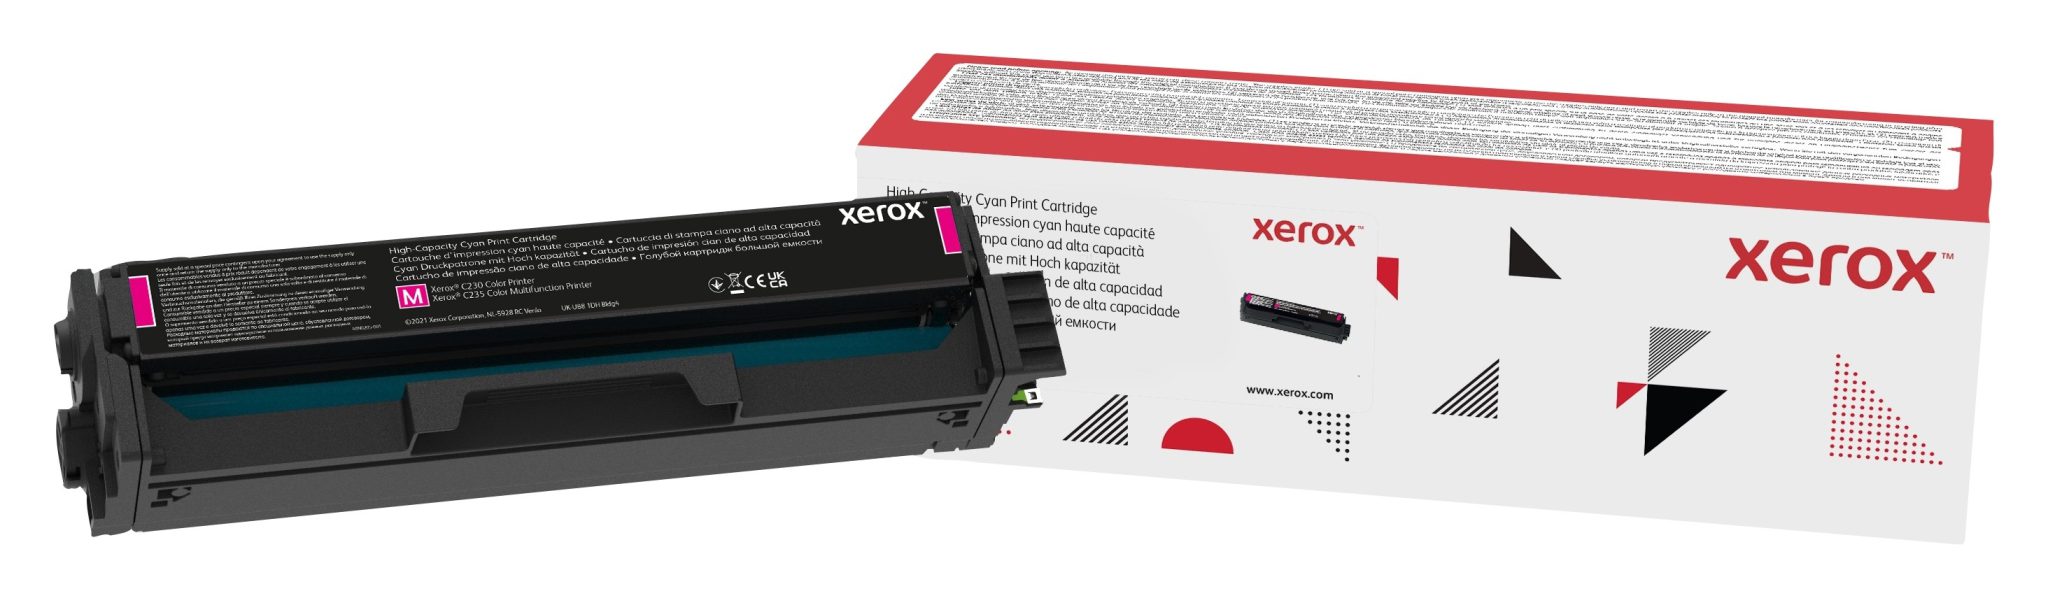 XEROX C230/C235 Magenta High Capacity Toner Cartridge 2500 pages